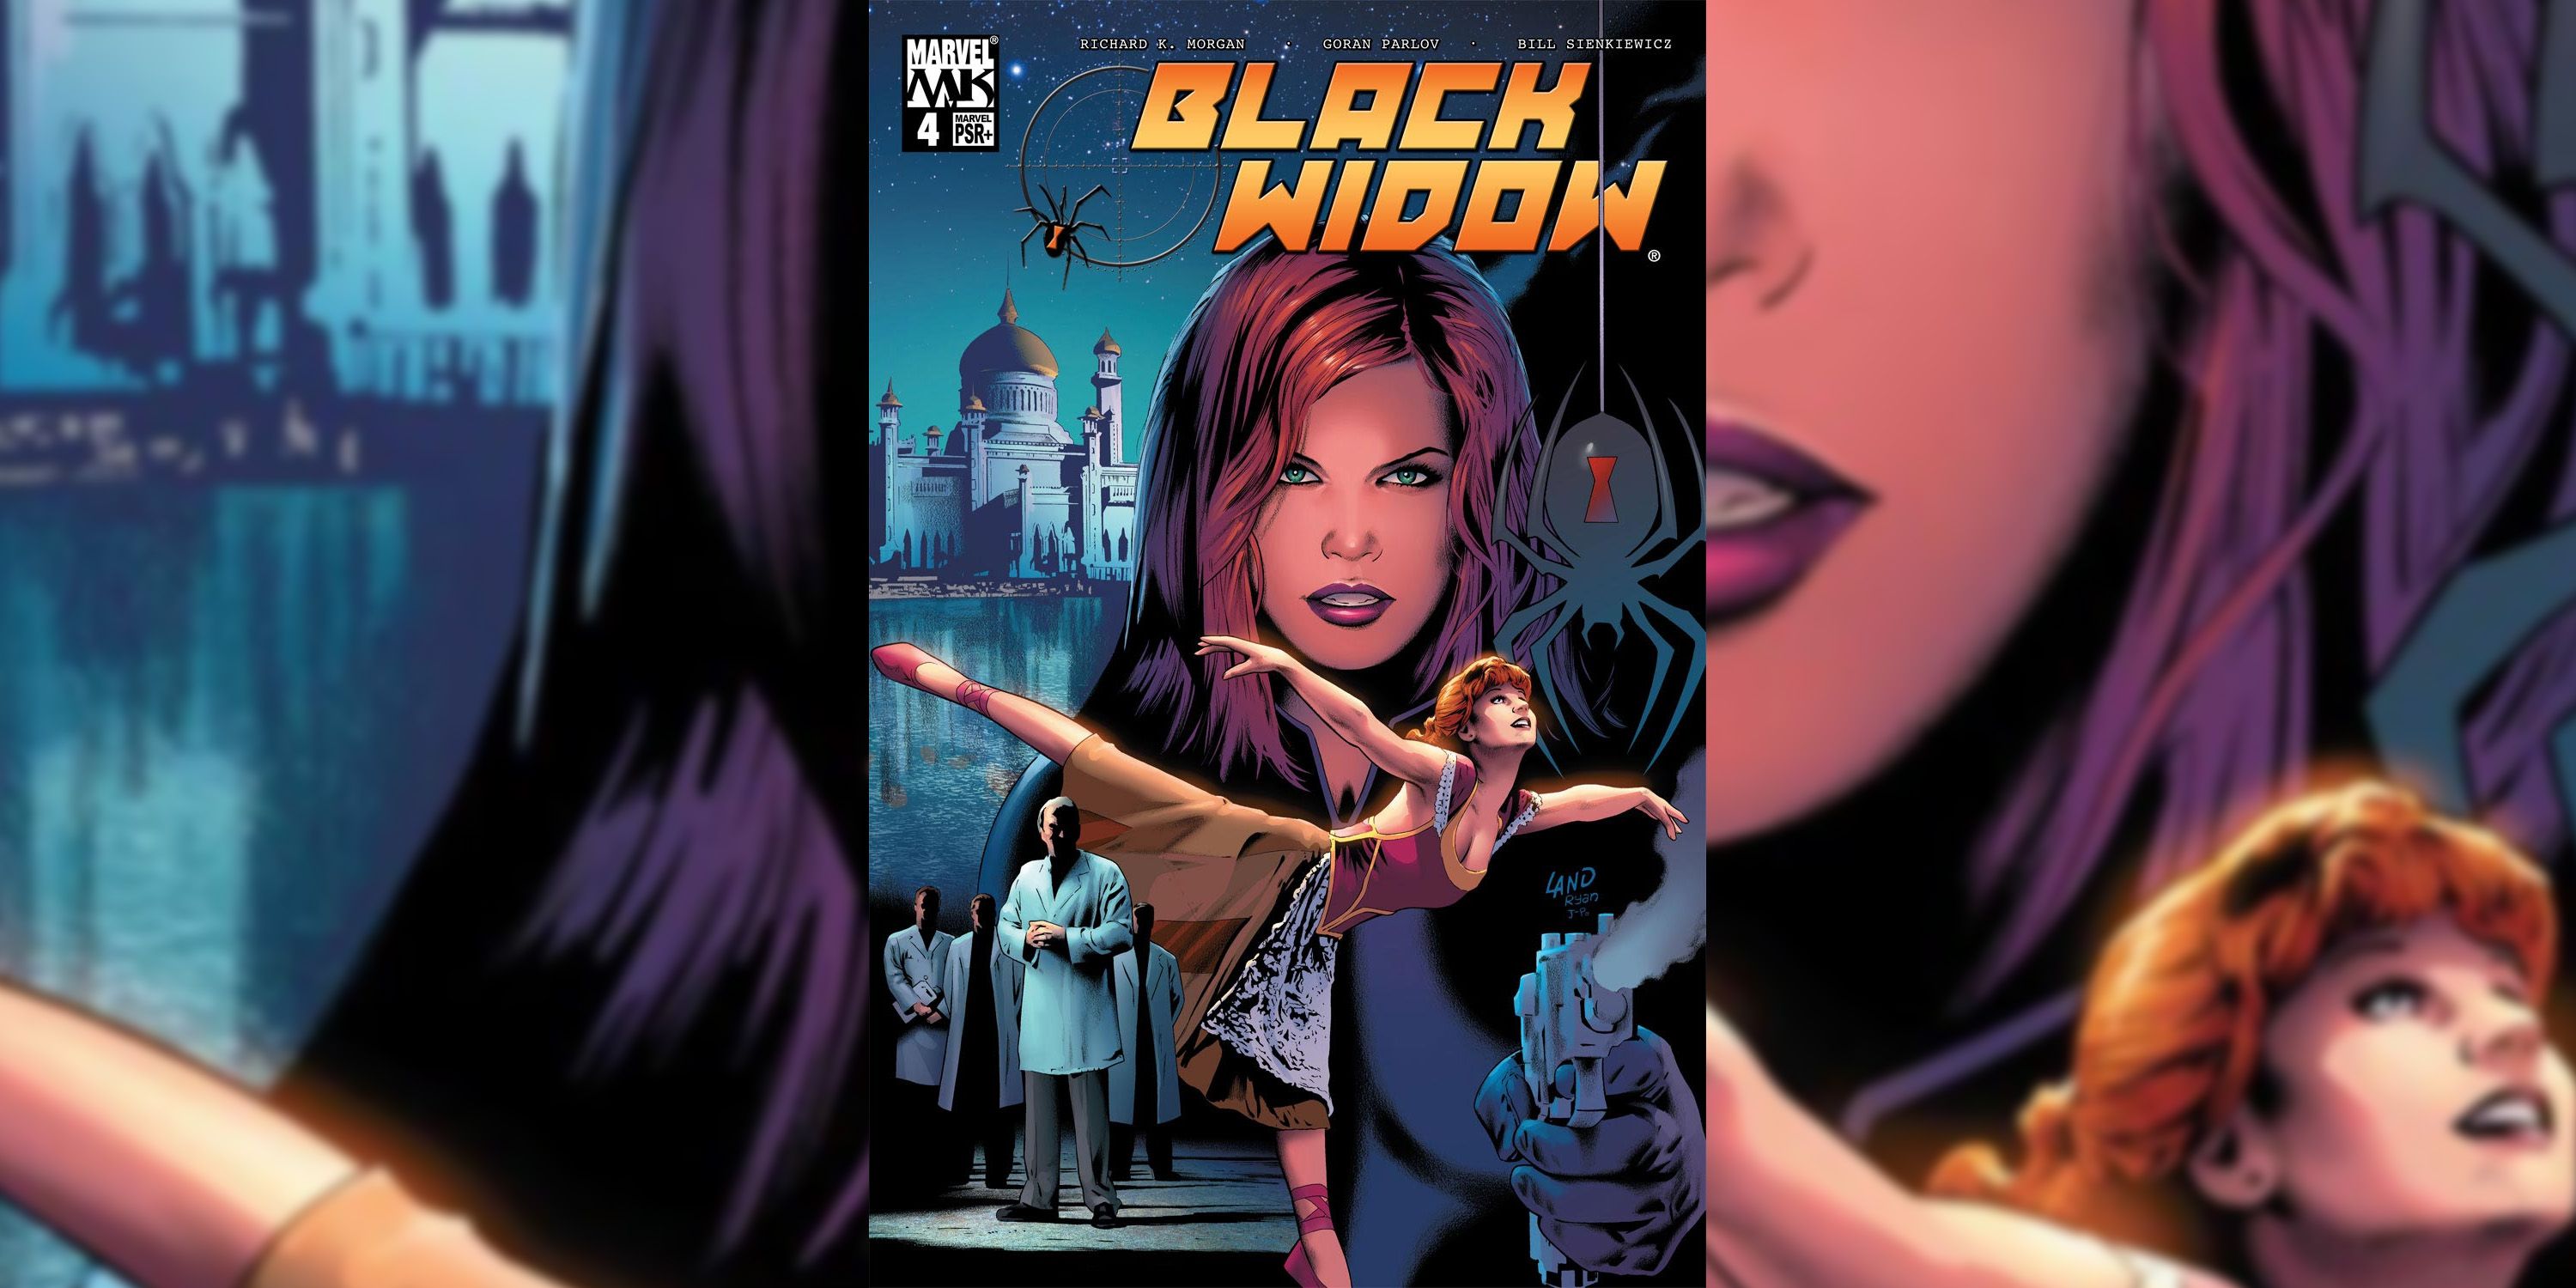 Black Widow's Homecoming storyline